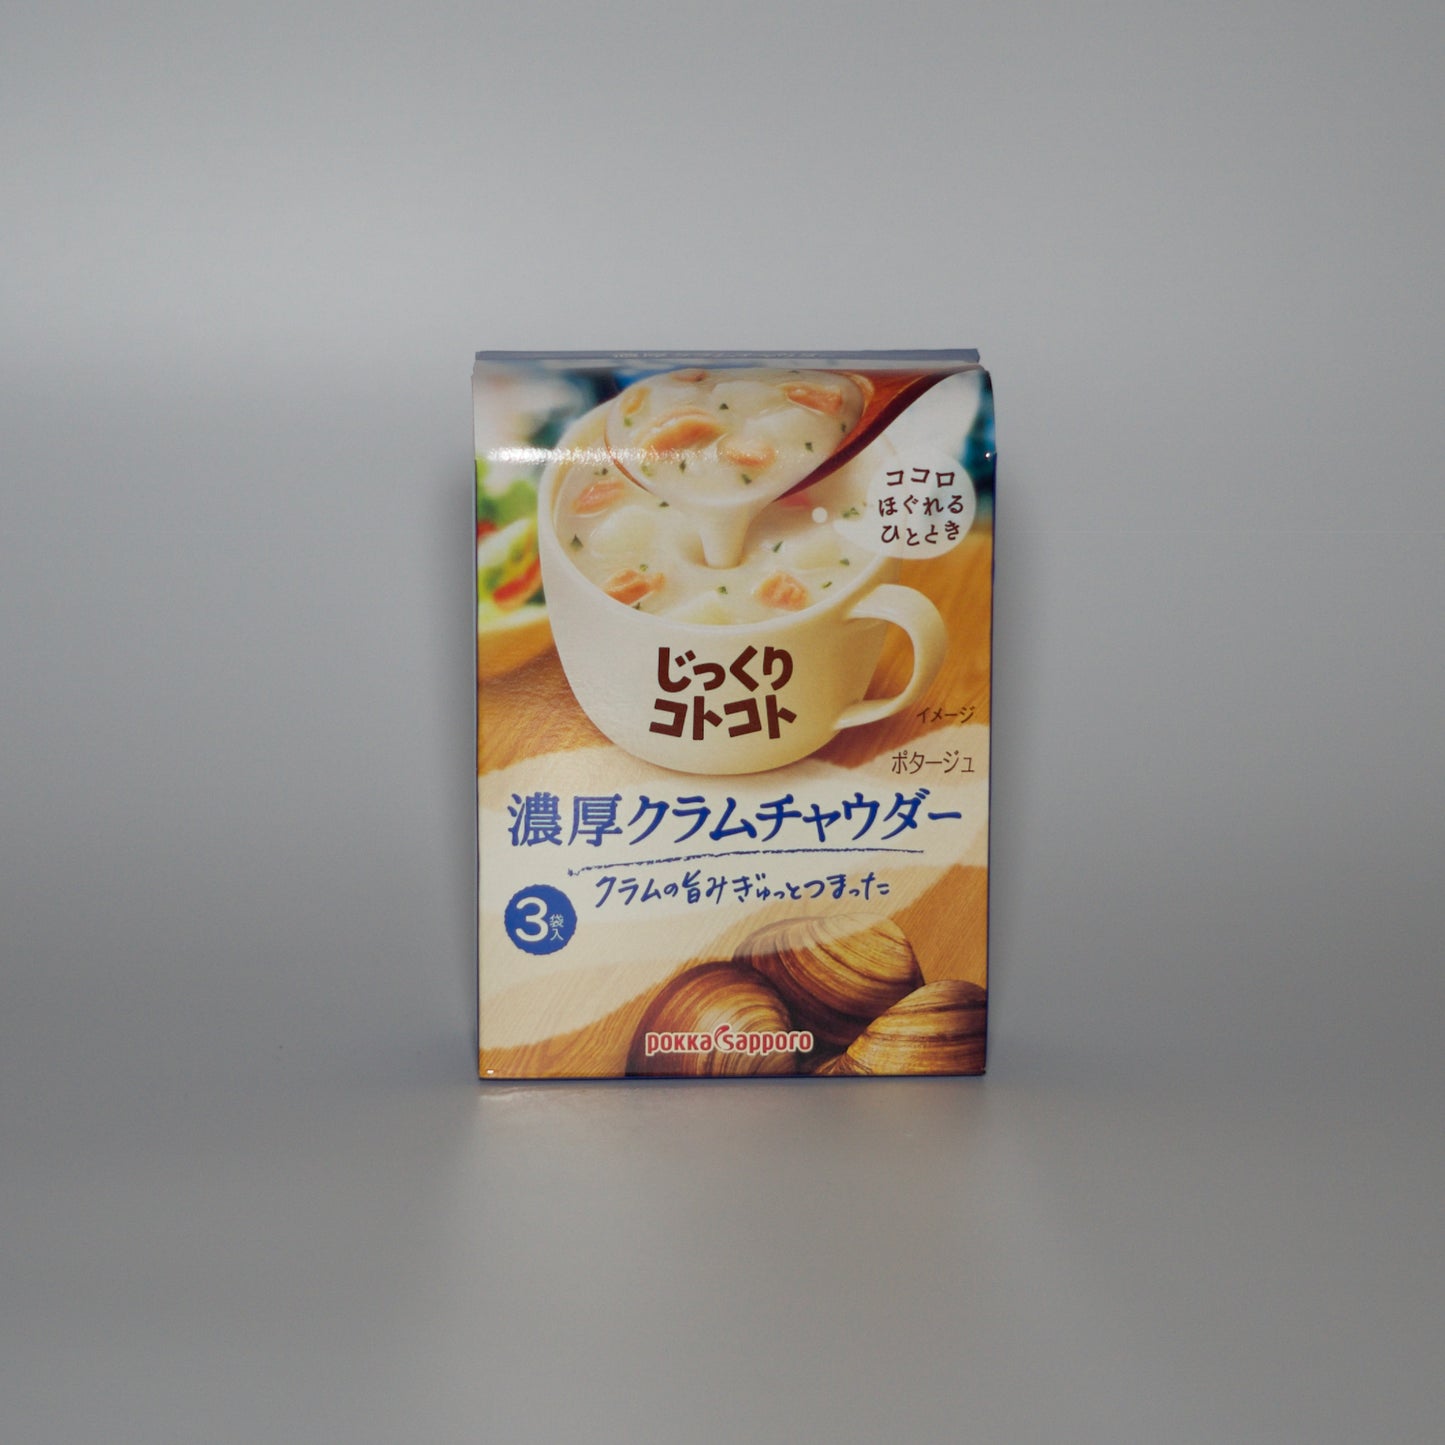 Expired - Pokka Sapporo Jikkuri Kotokoto Rich Clam Chowder Soup 3 Pcs 50.7g